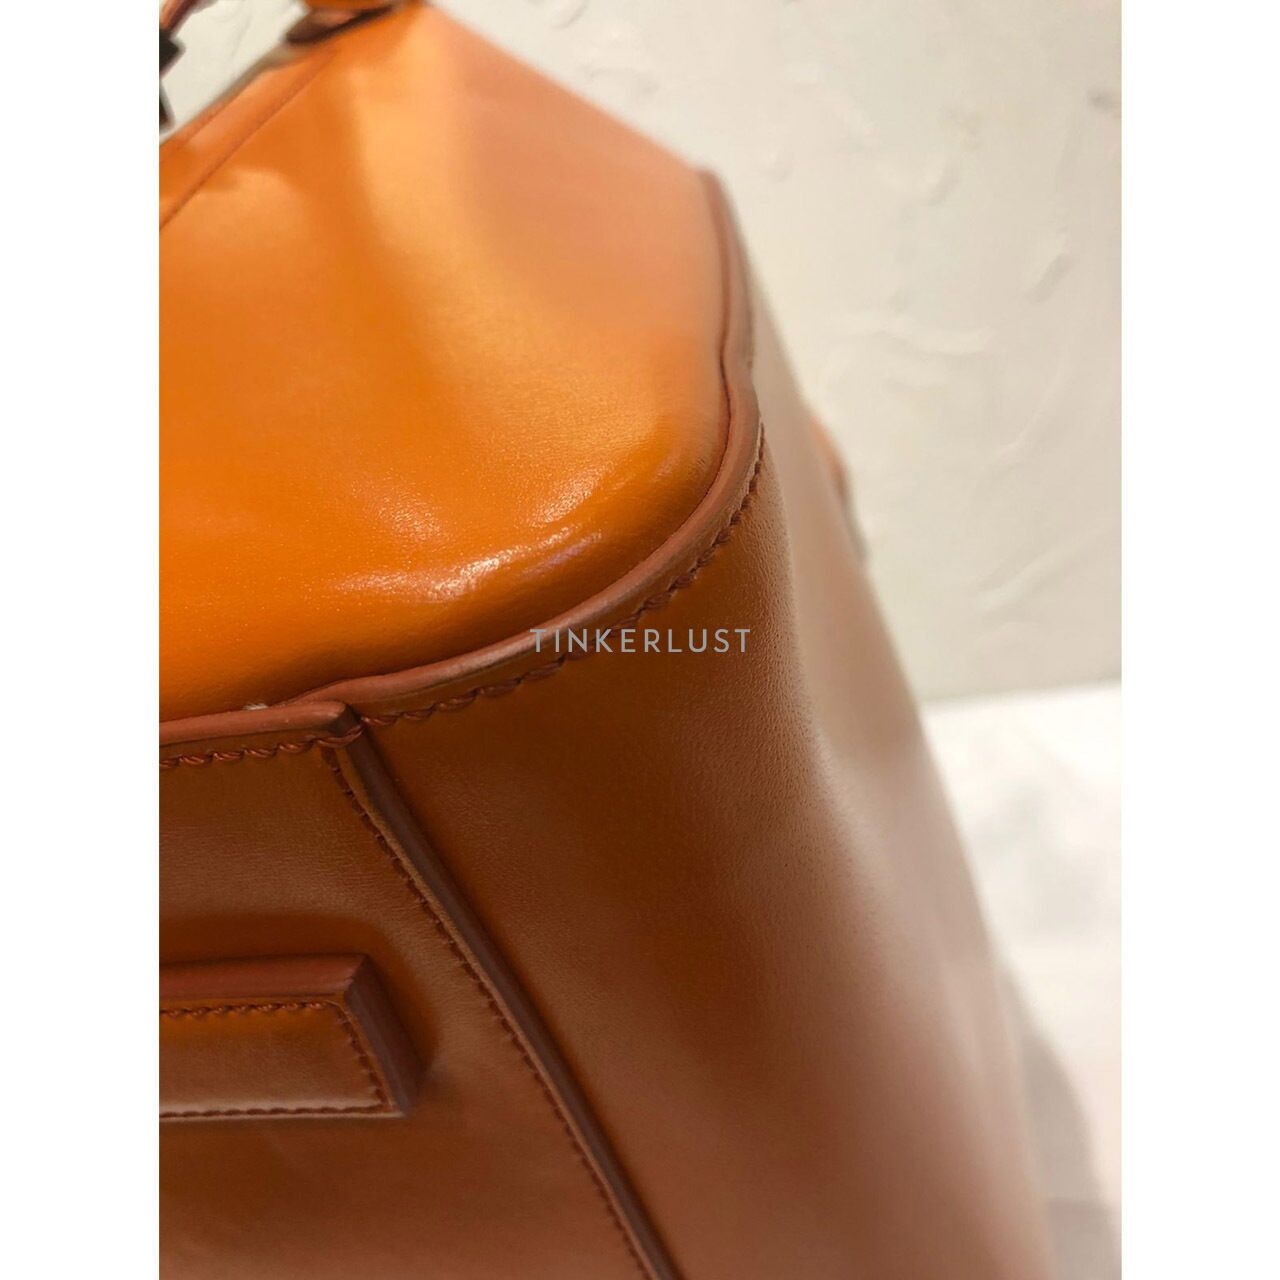 Givenchy Antigona Medium Orange Smooth Leather 2012 GHW Satchel